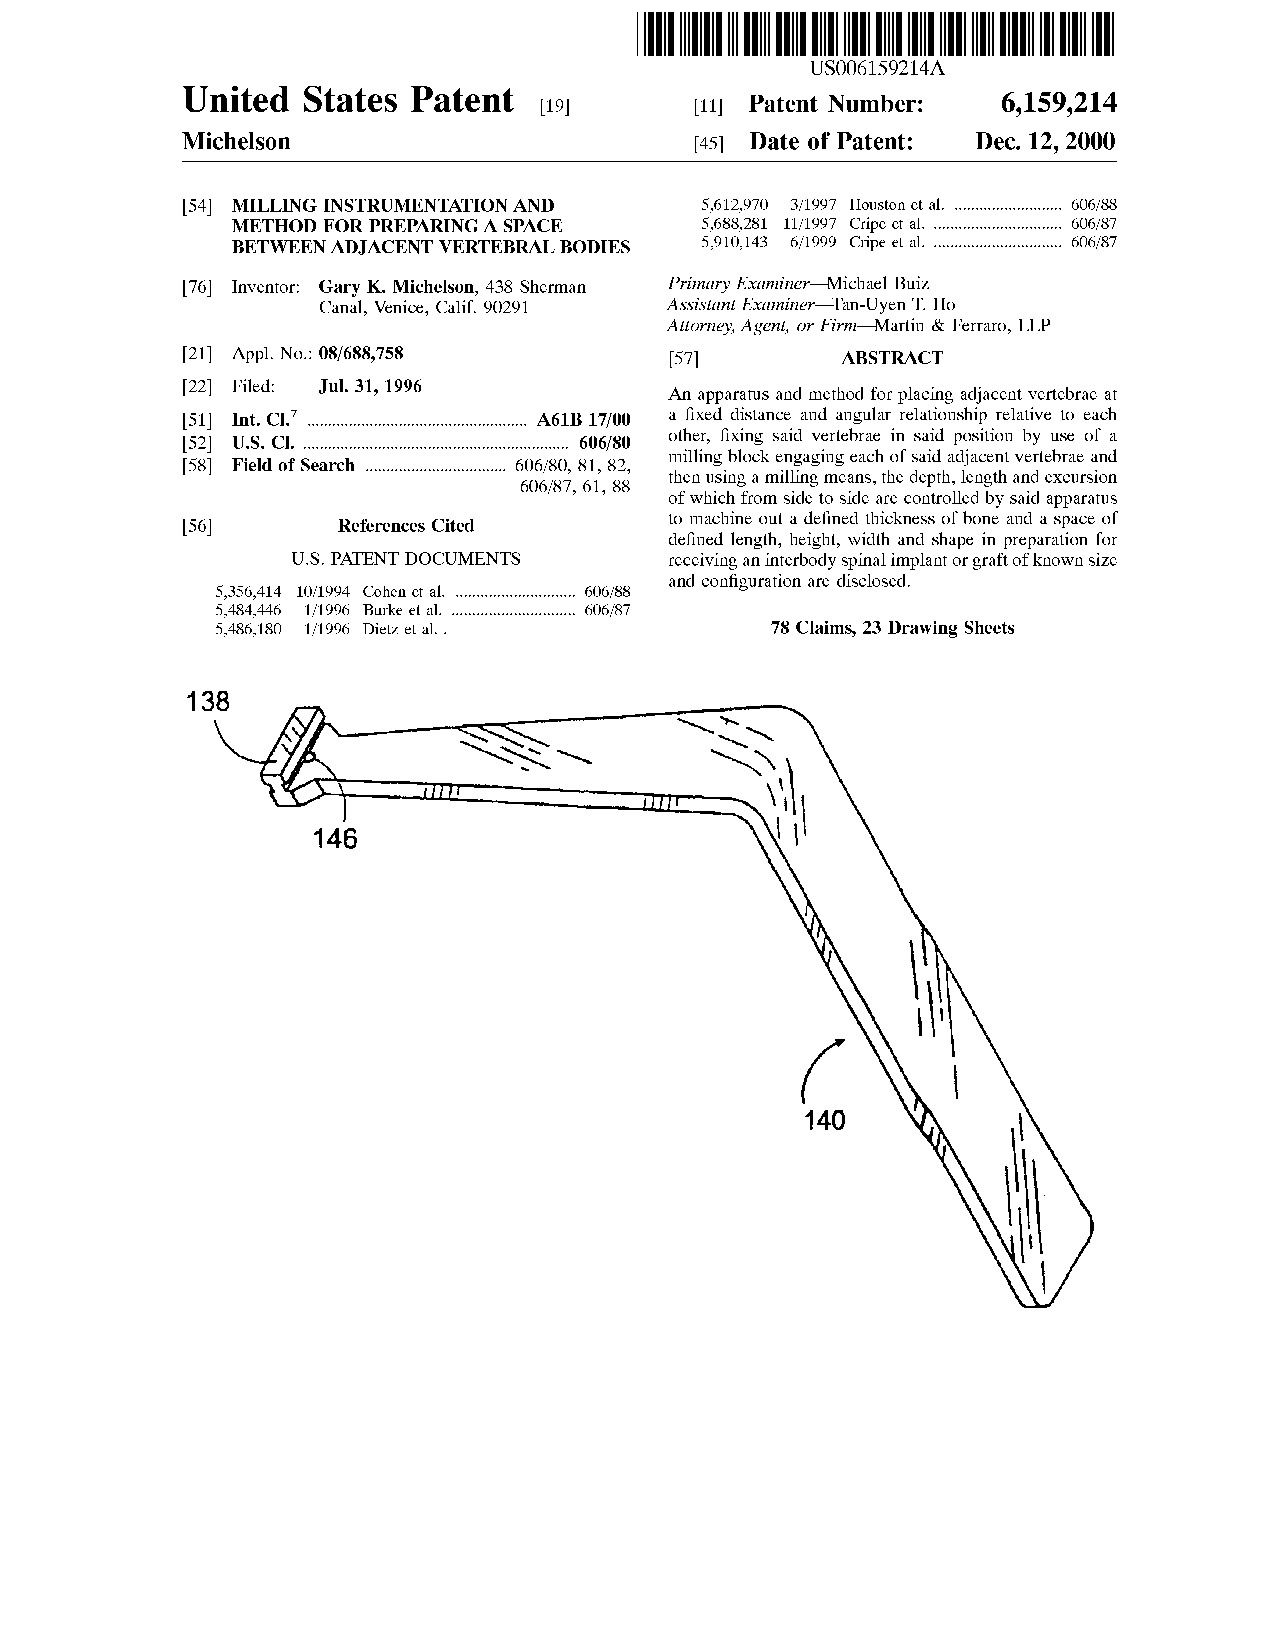 Milling instrumentation and method for preparing a space between     adjacent vertebral bodies - Patent 6,159,214